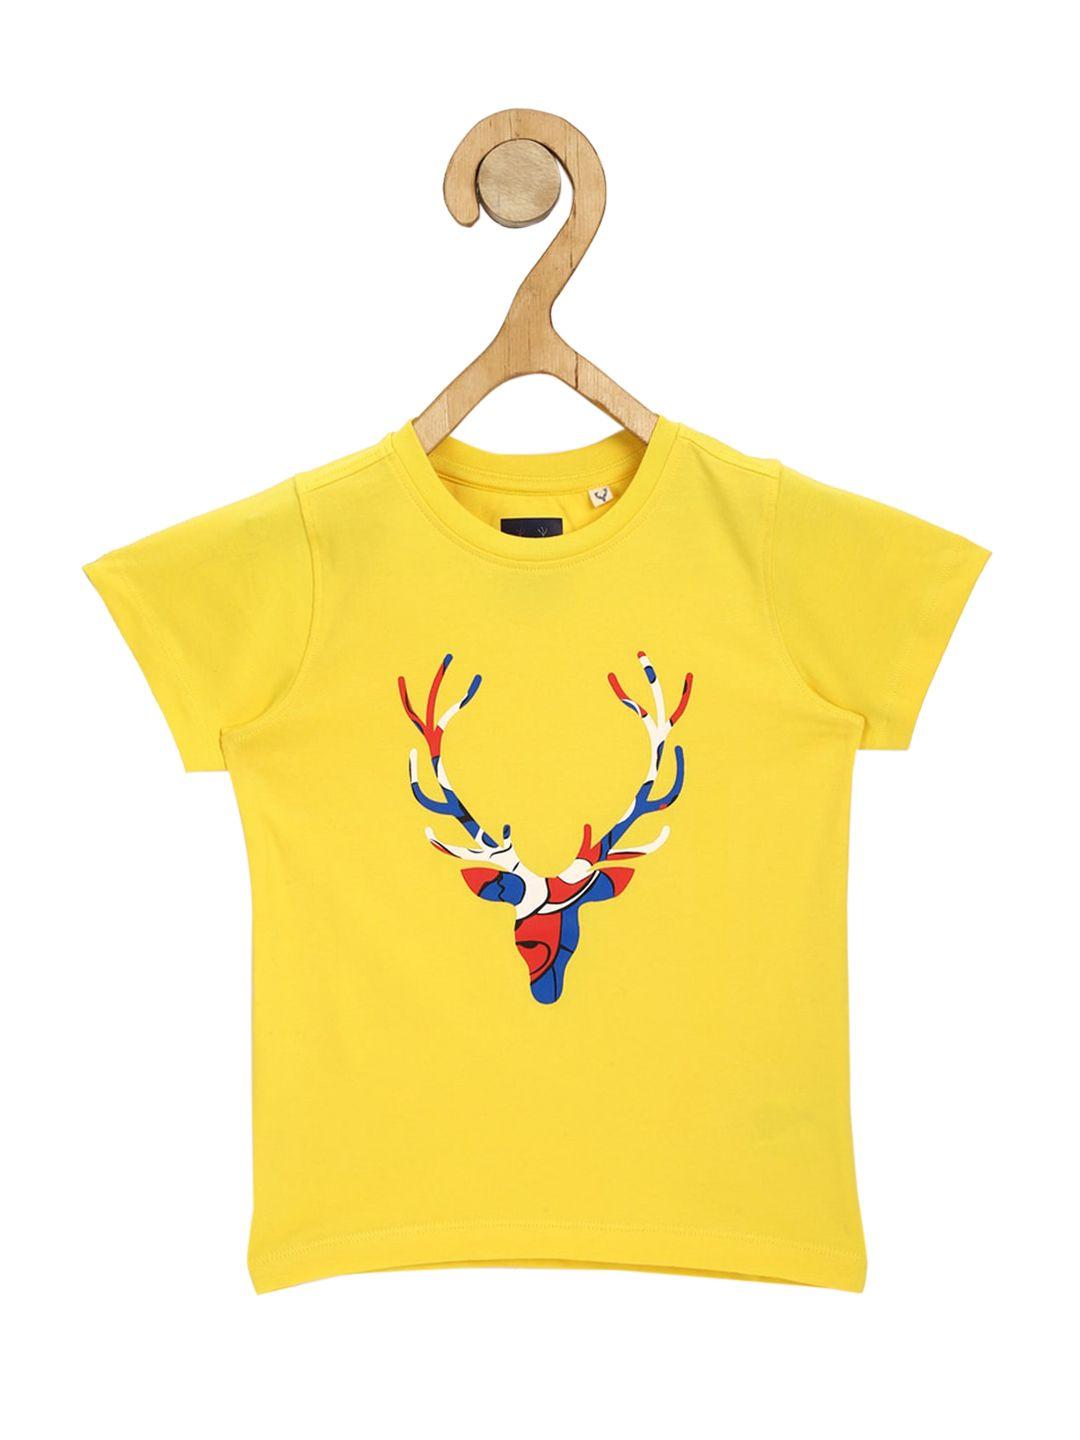 allen-solly-junior-boys-yellow-printed-round-neck-t-shirt